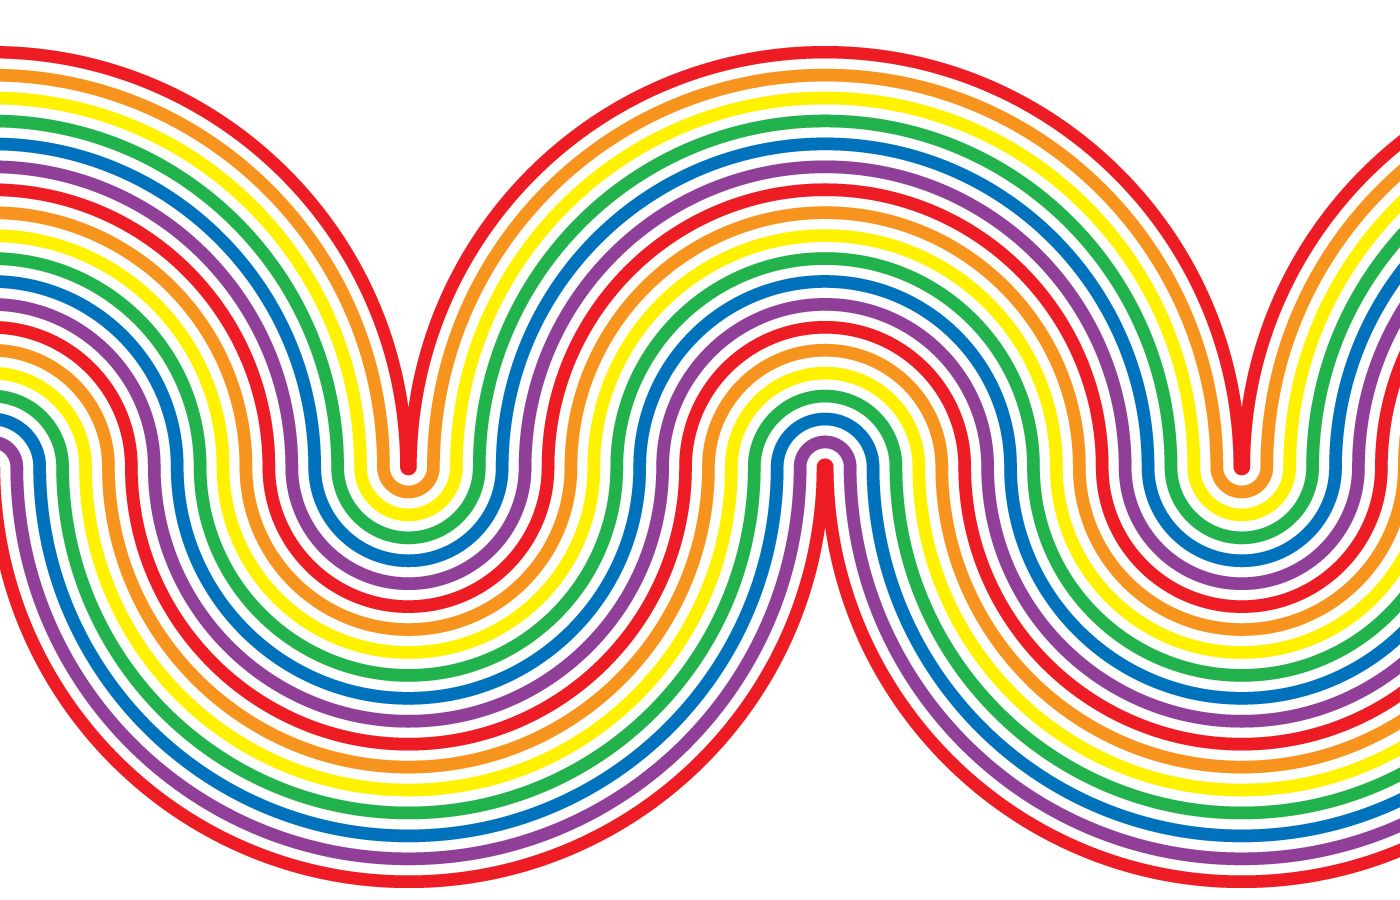 Retro Rainbow wallpaper by Mrazomor  Download on ZEDGE  5299